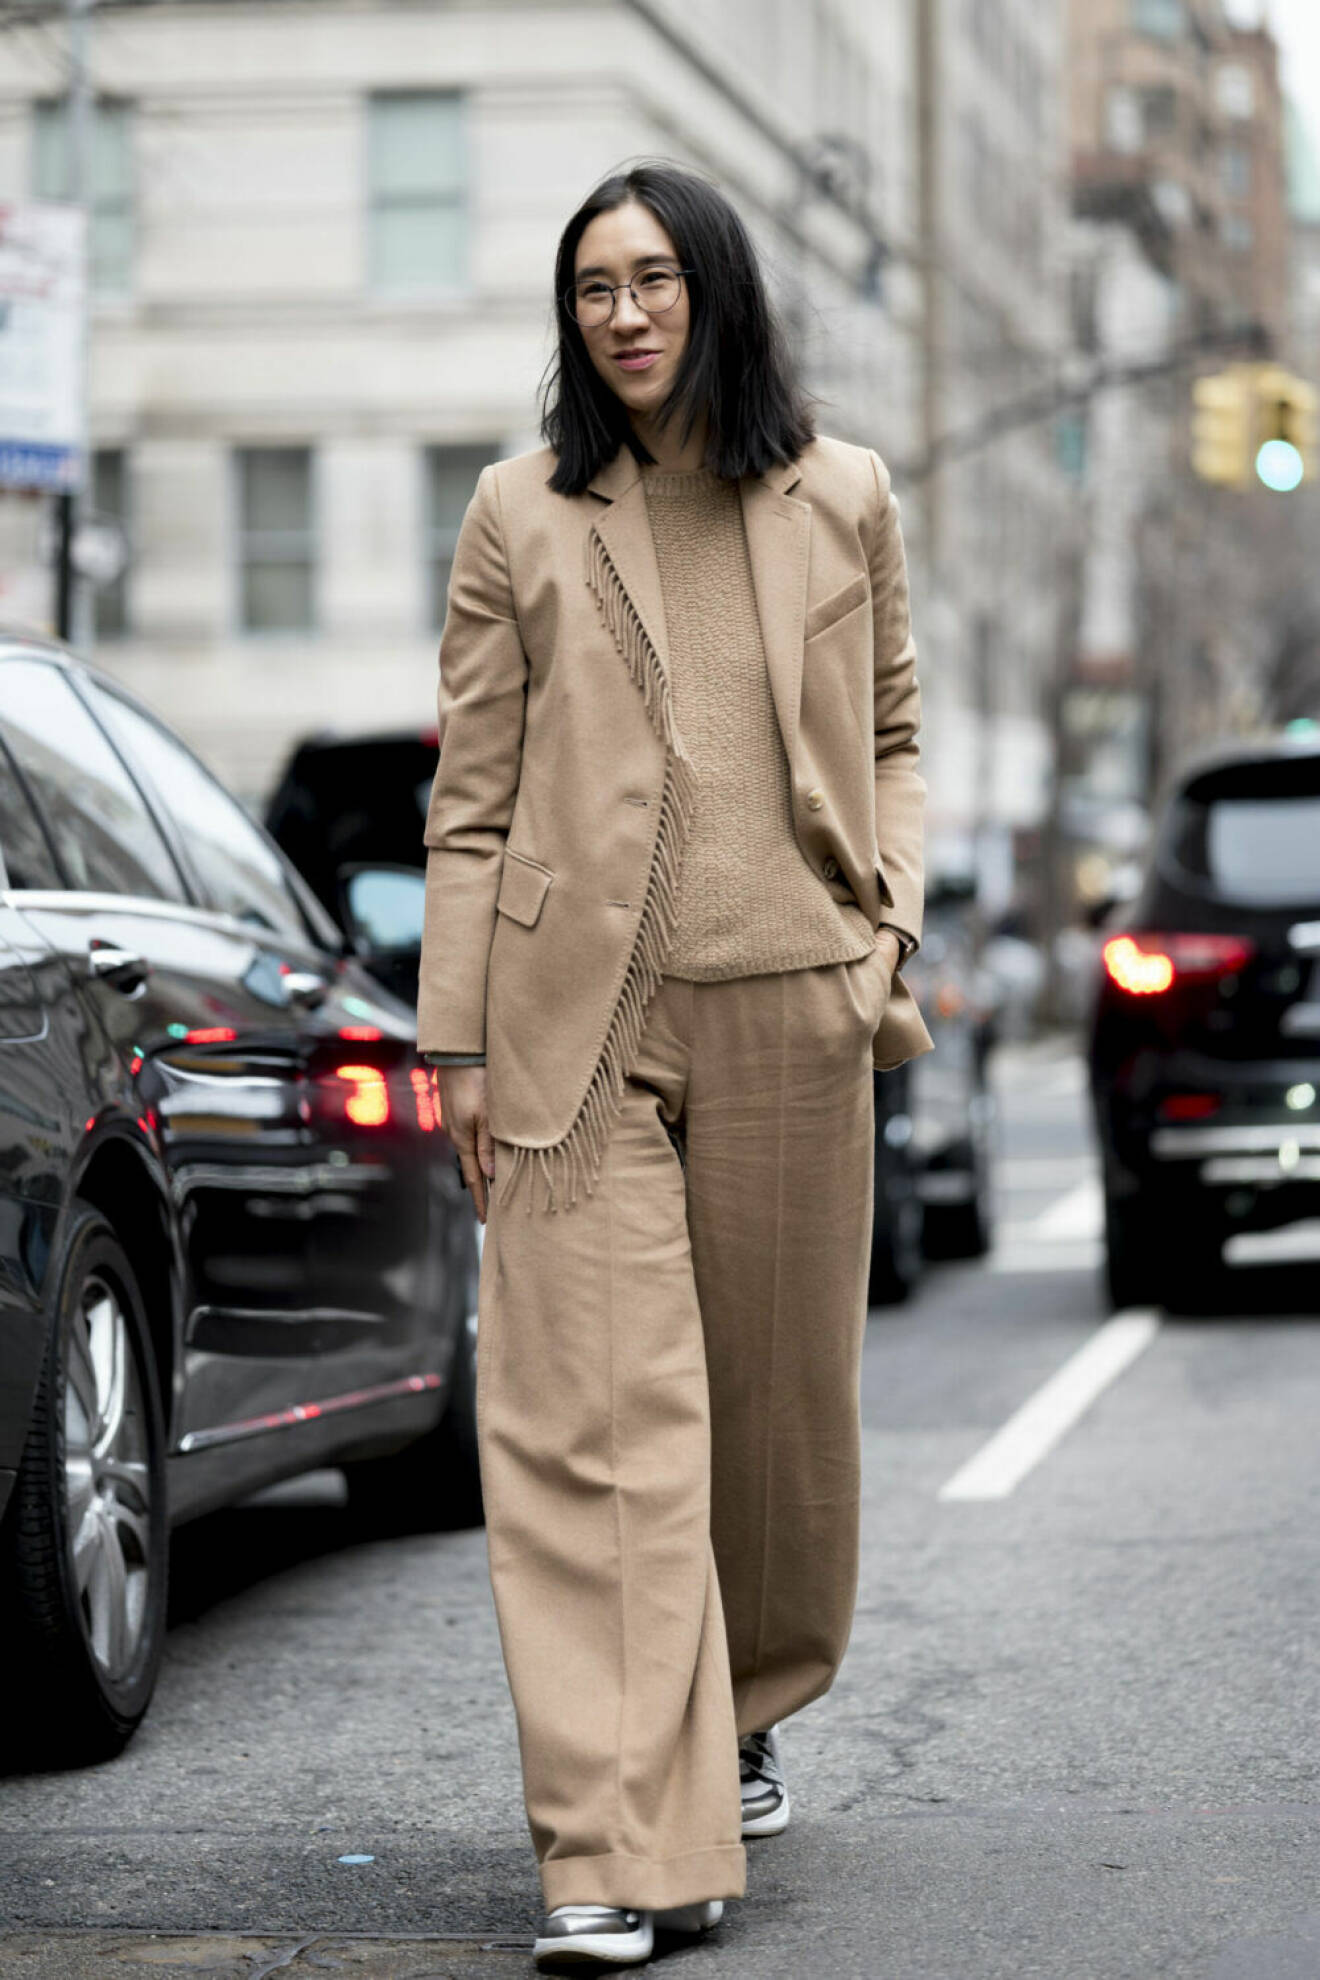 Streetstyle NYFW, Eva Chen i beige outfit.